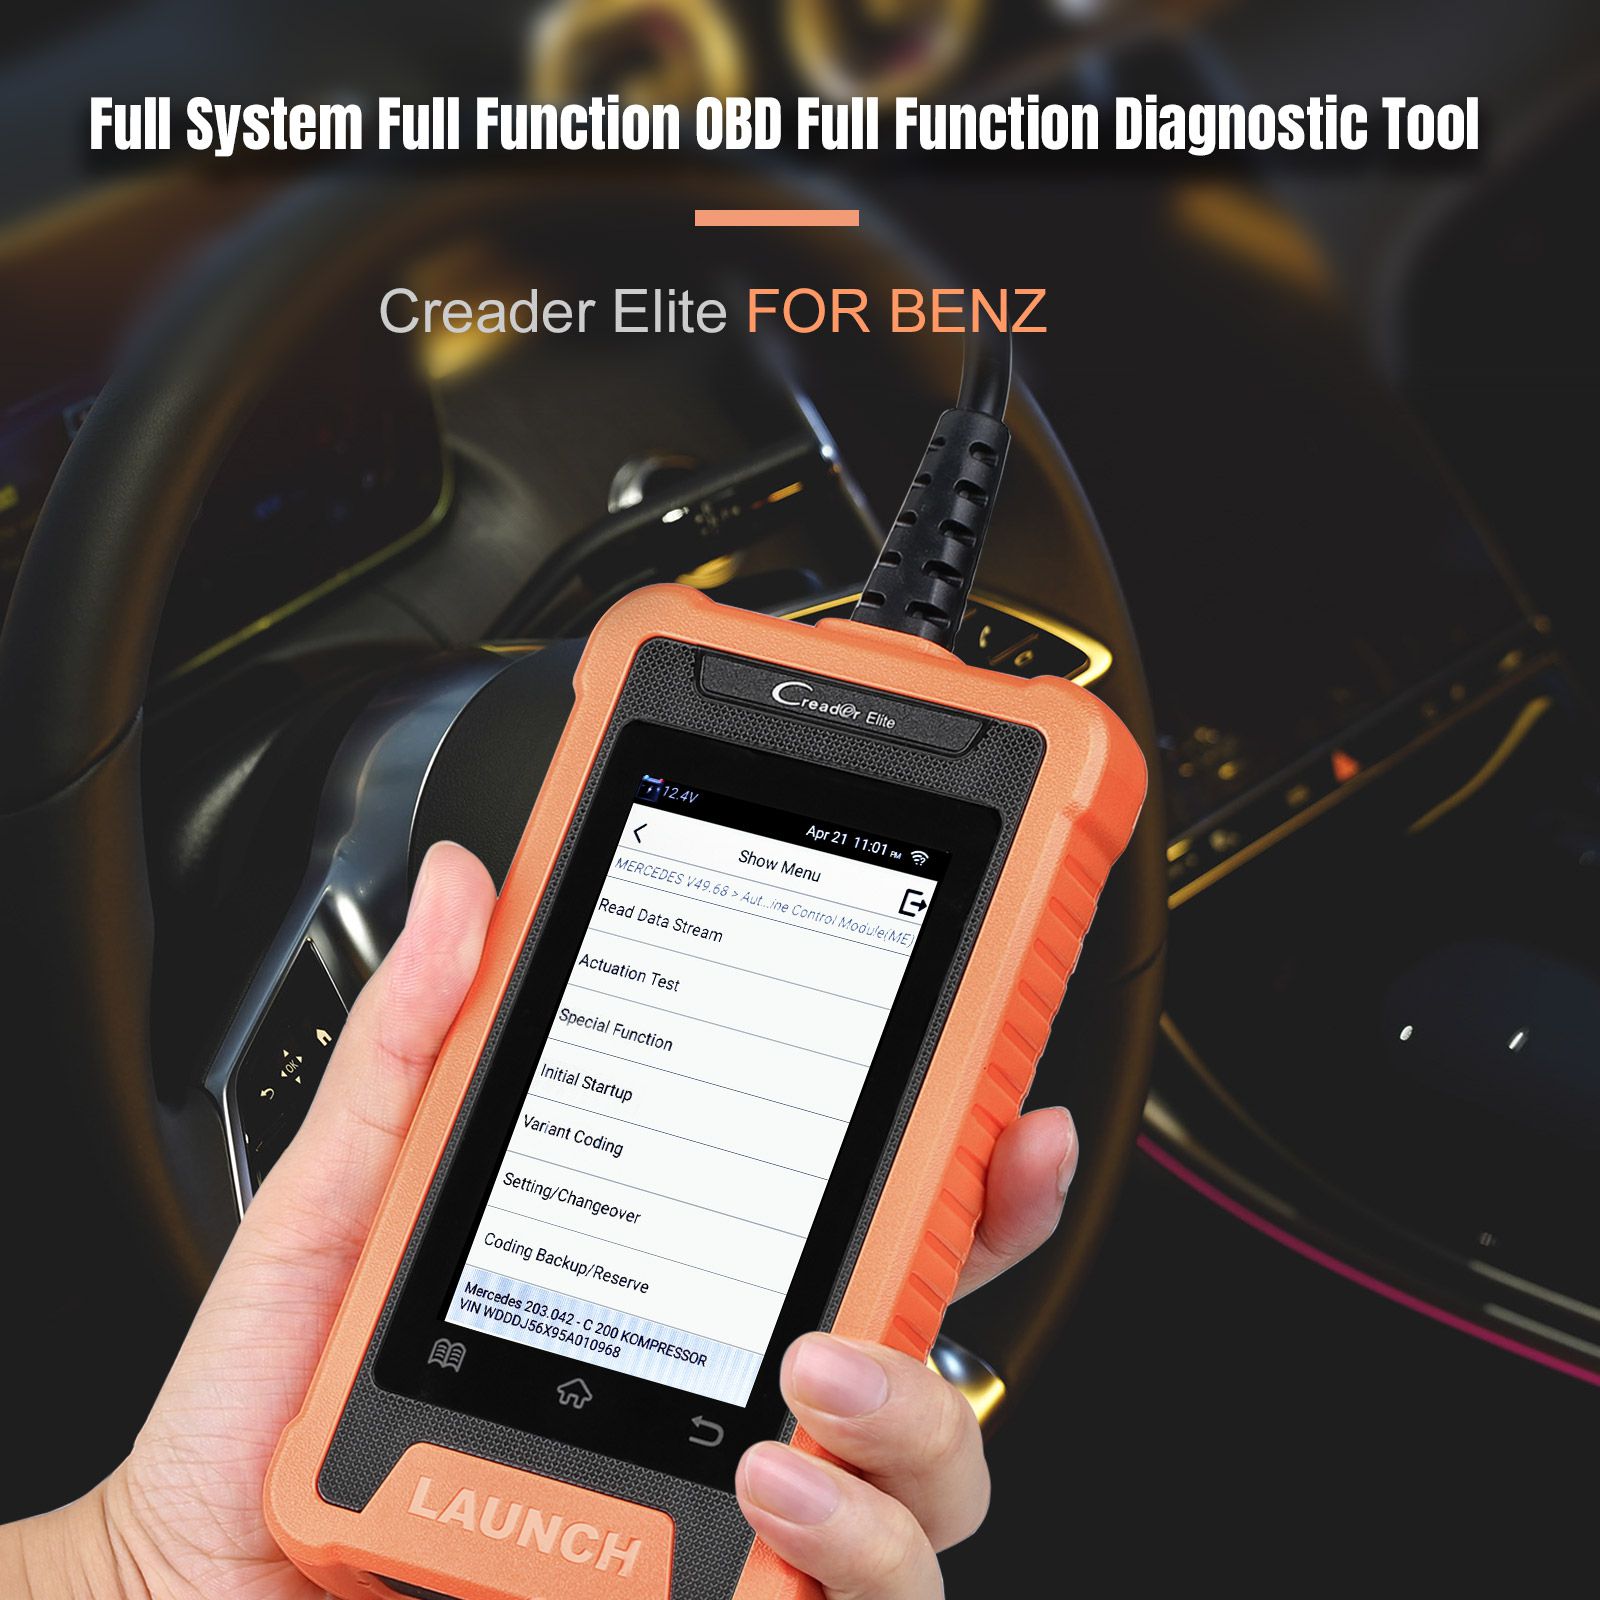 BENZ全系统诊断工具OBDII扫描仪的最新启动Creader Elite